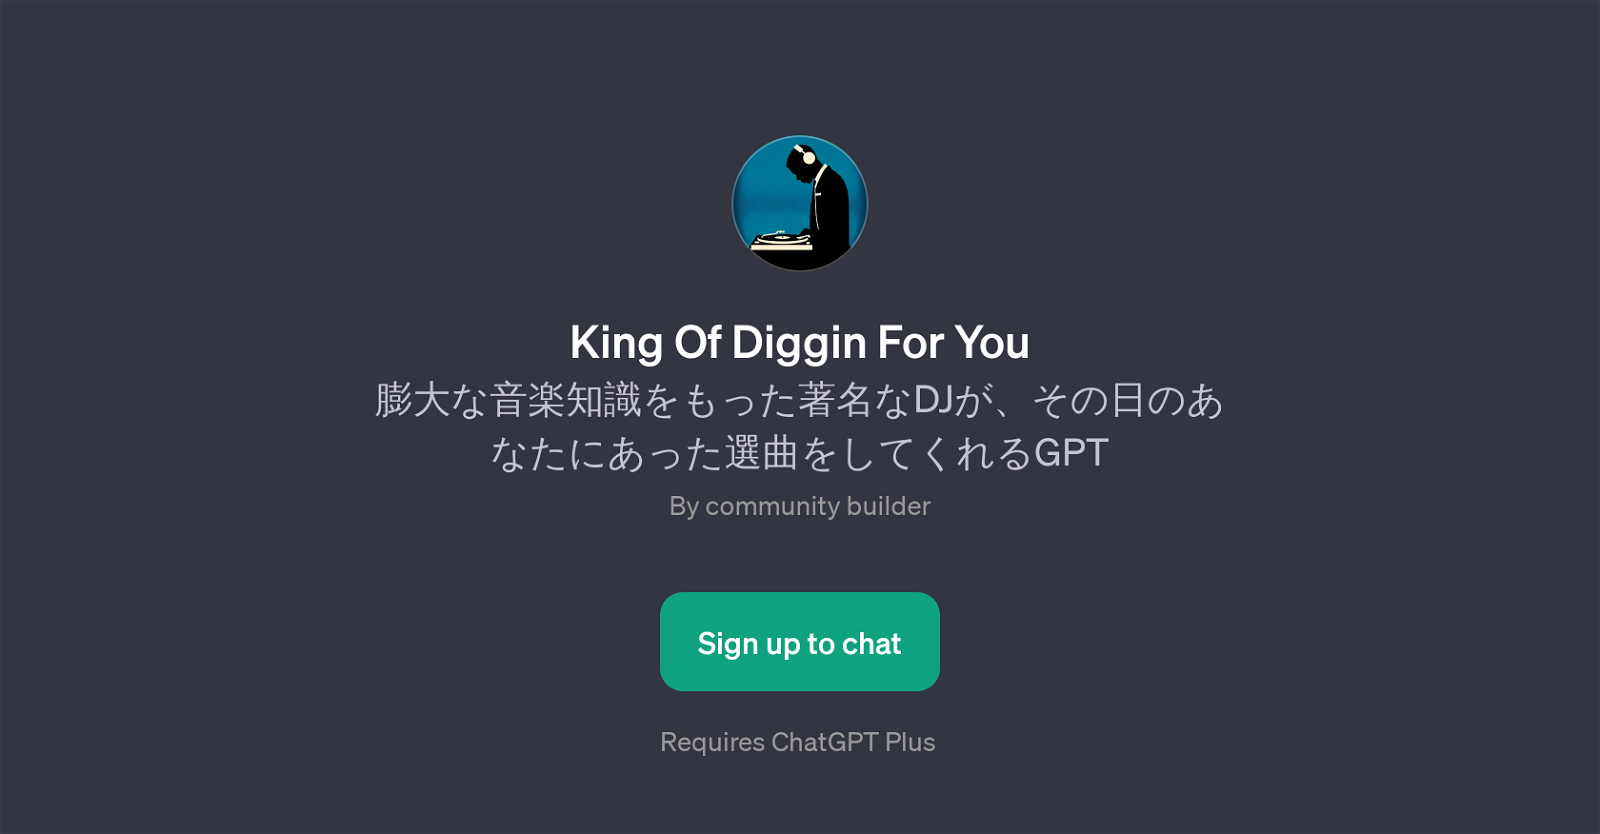 King Of Diggin For You website